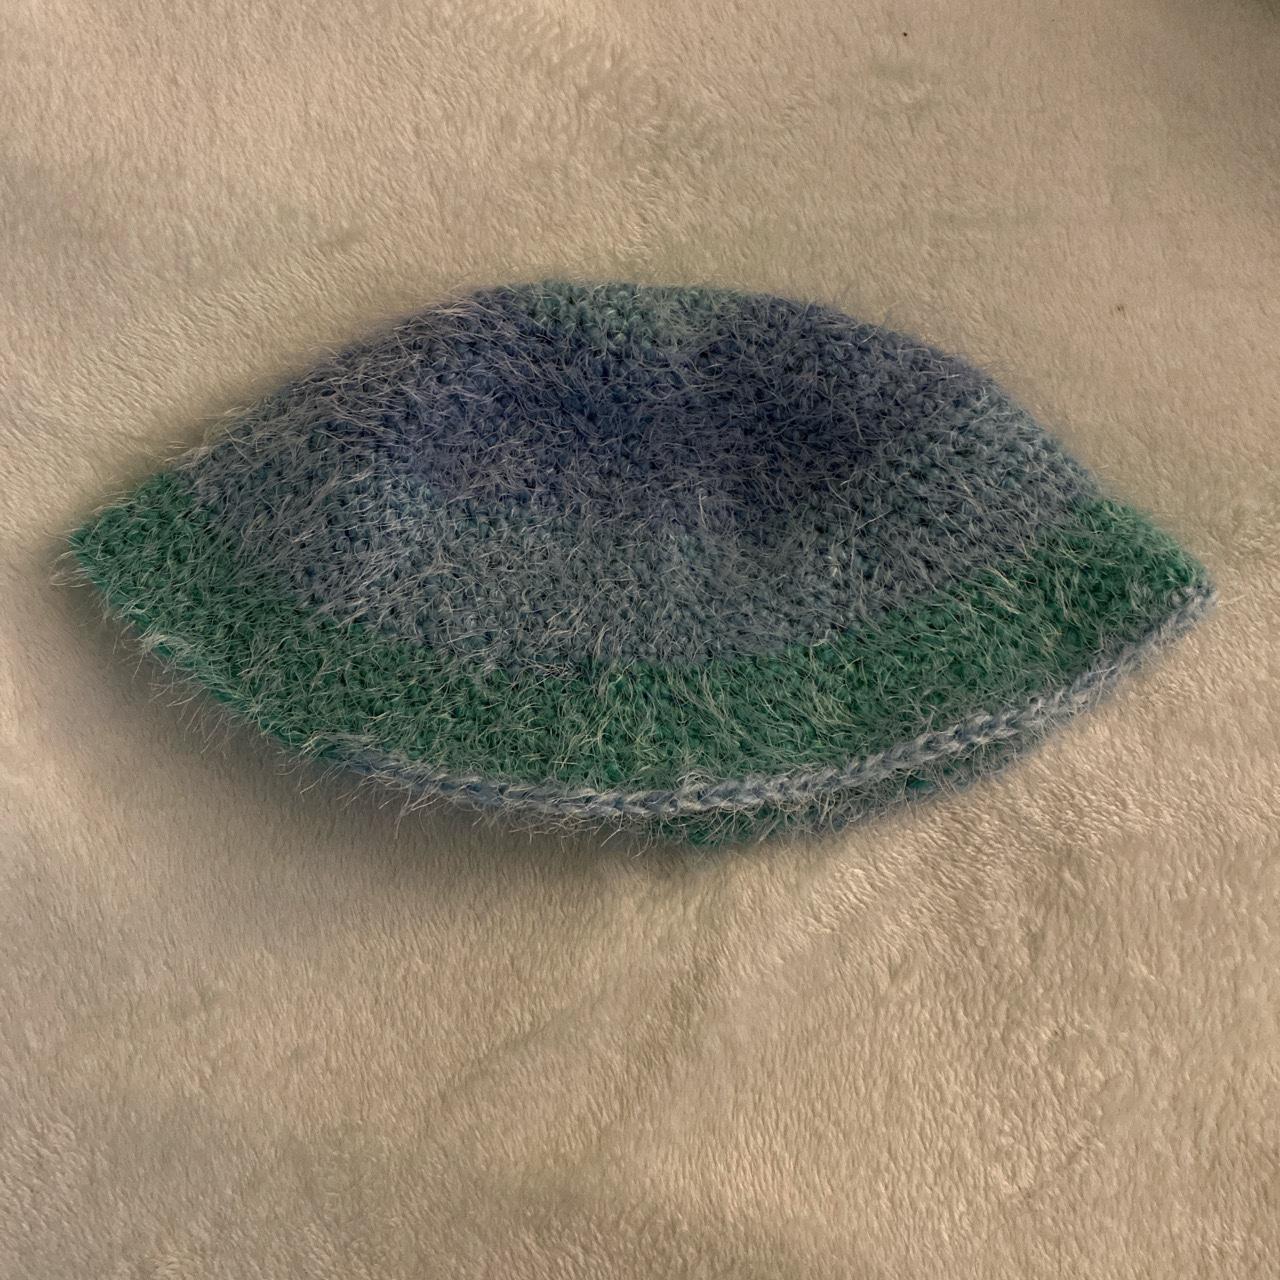 Fuzzy Crocheted Hat // Blue Greenish Handmade by... - Depop